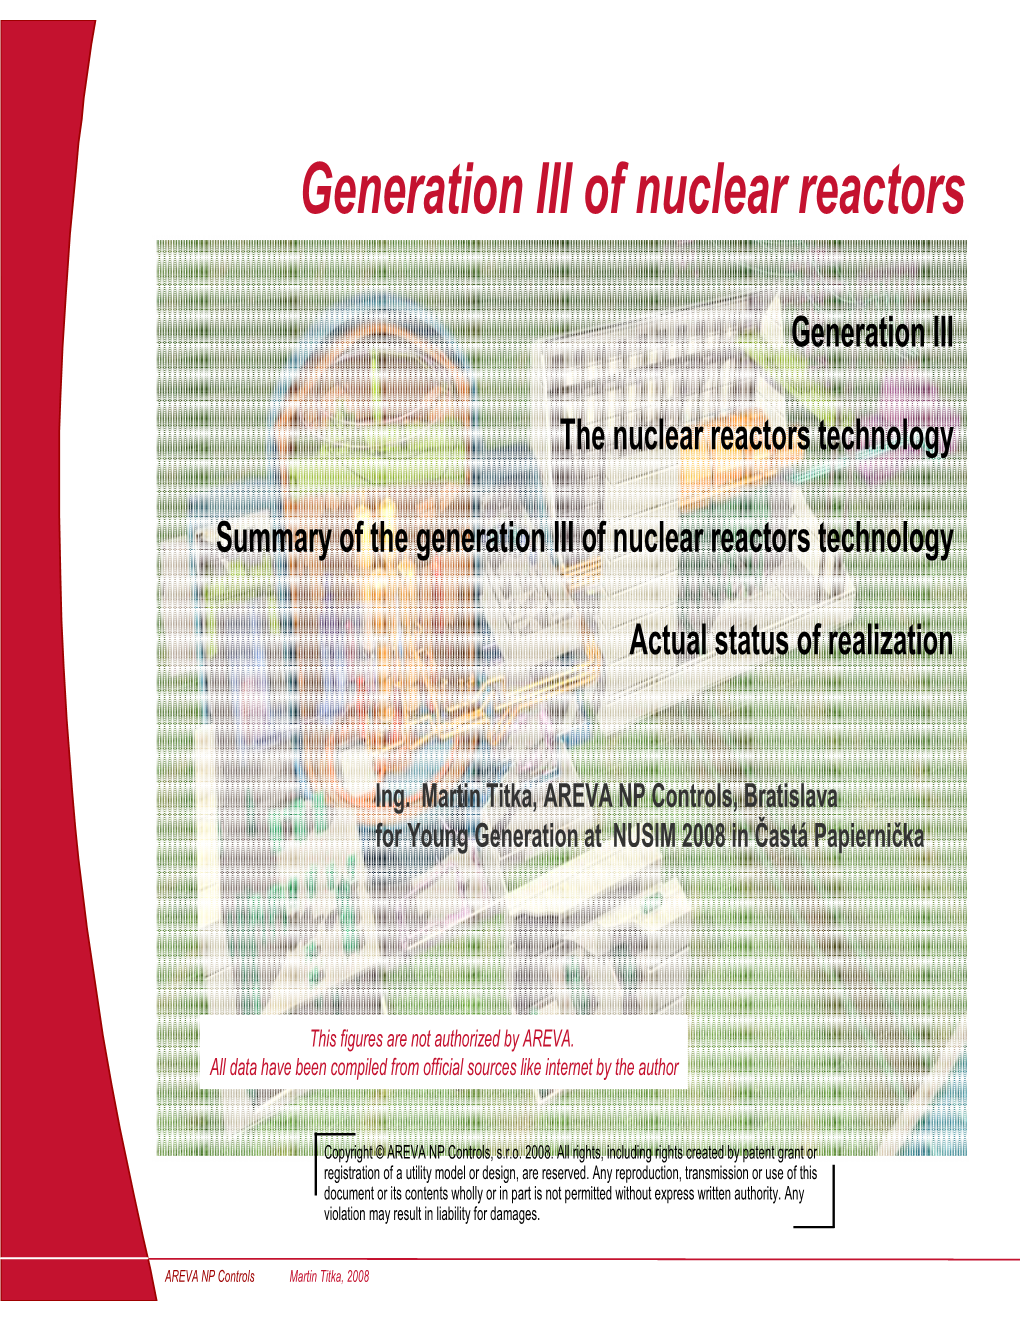 Generation III of Nuclear Reactors